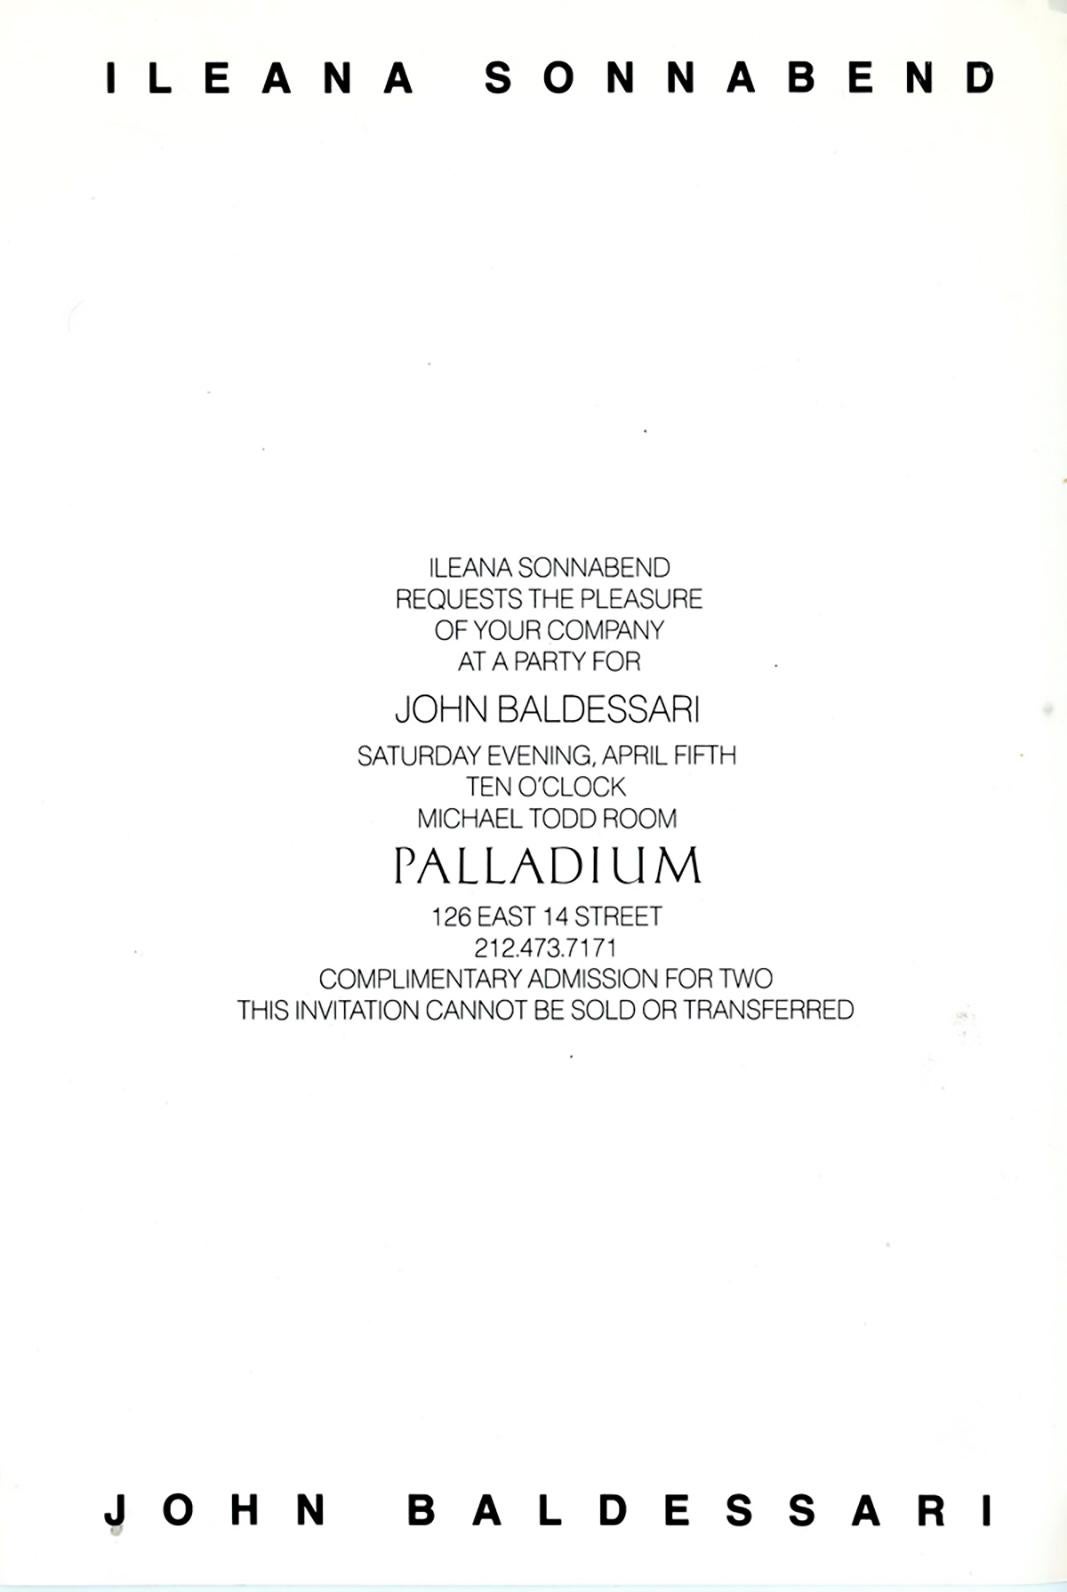 John Baldessari The Palladium NYC 1986 (announcement)  1